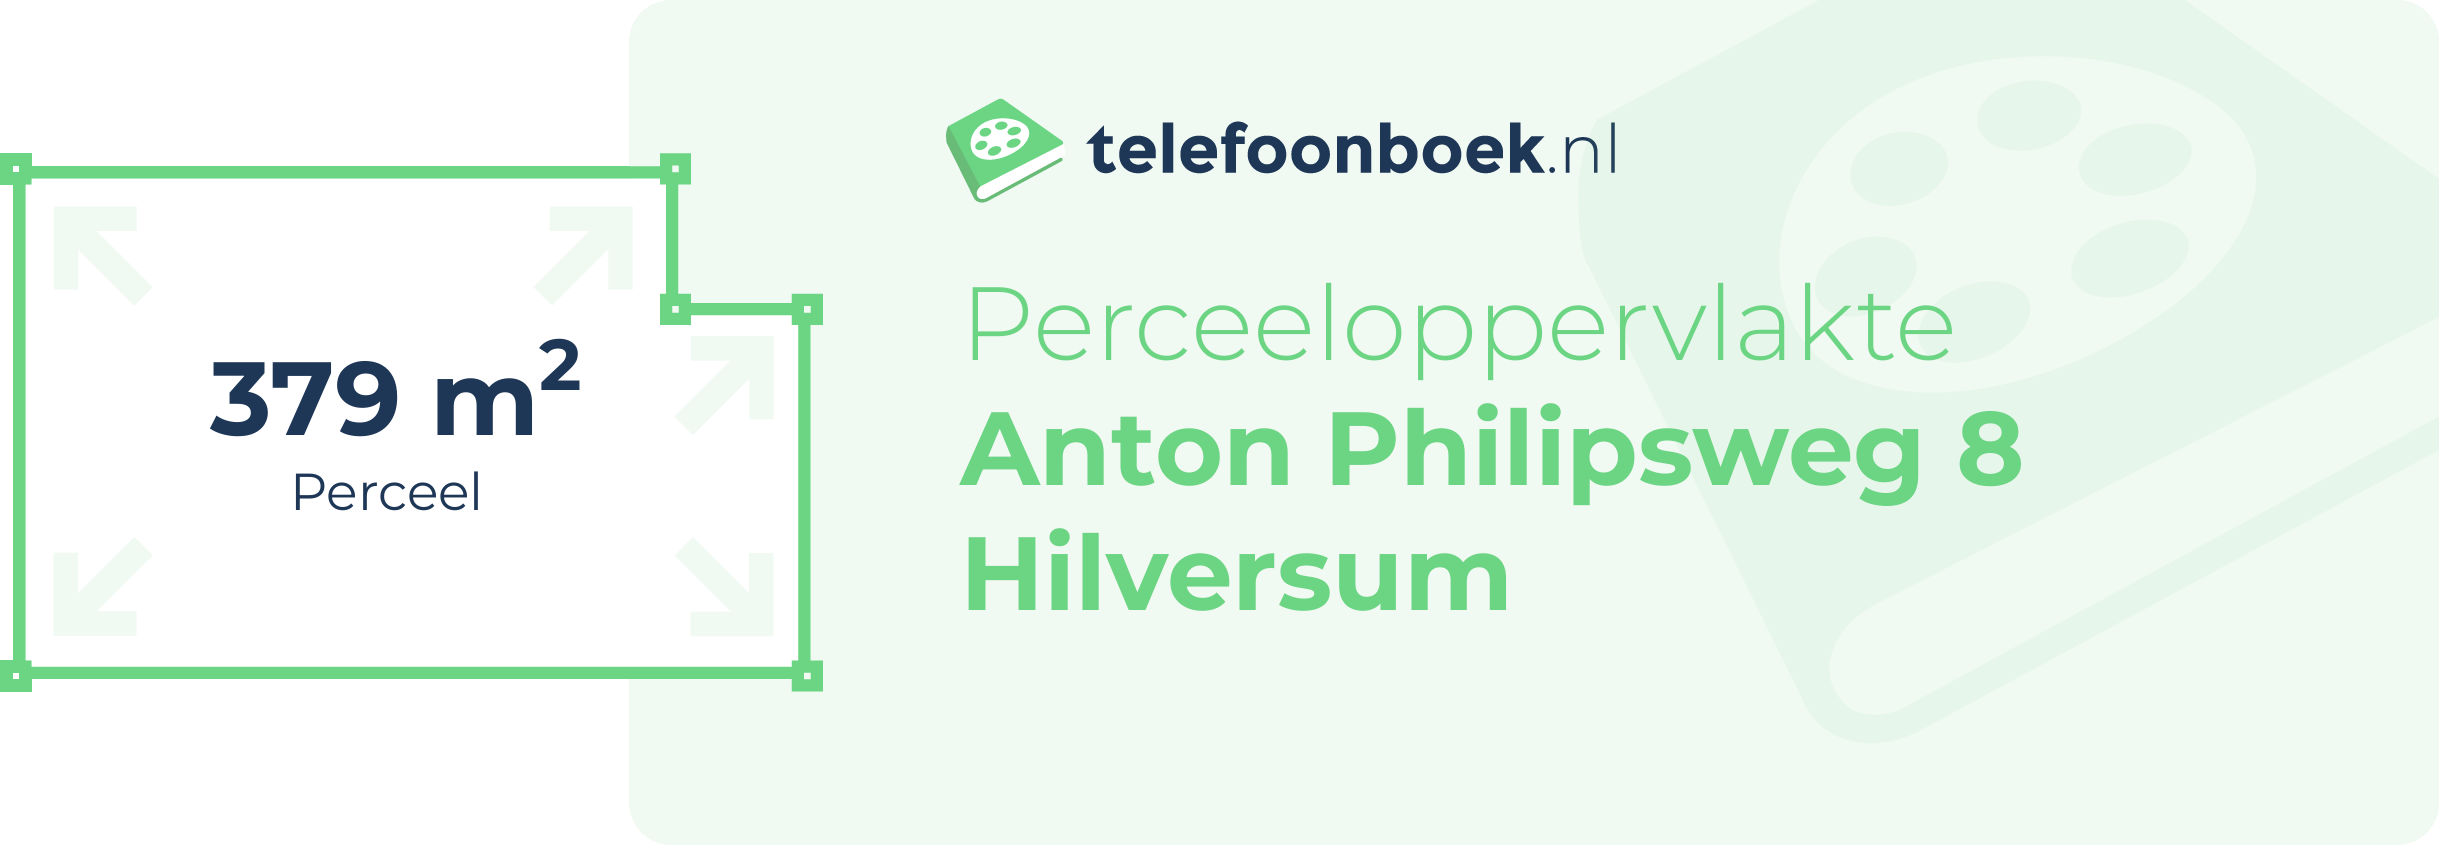 Perceeloppervlakte Anton Philipsweg 8 Hilversum